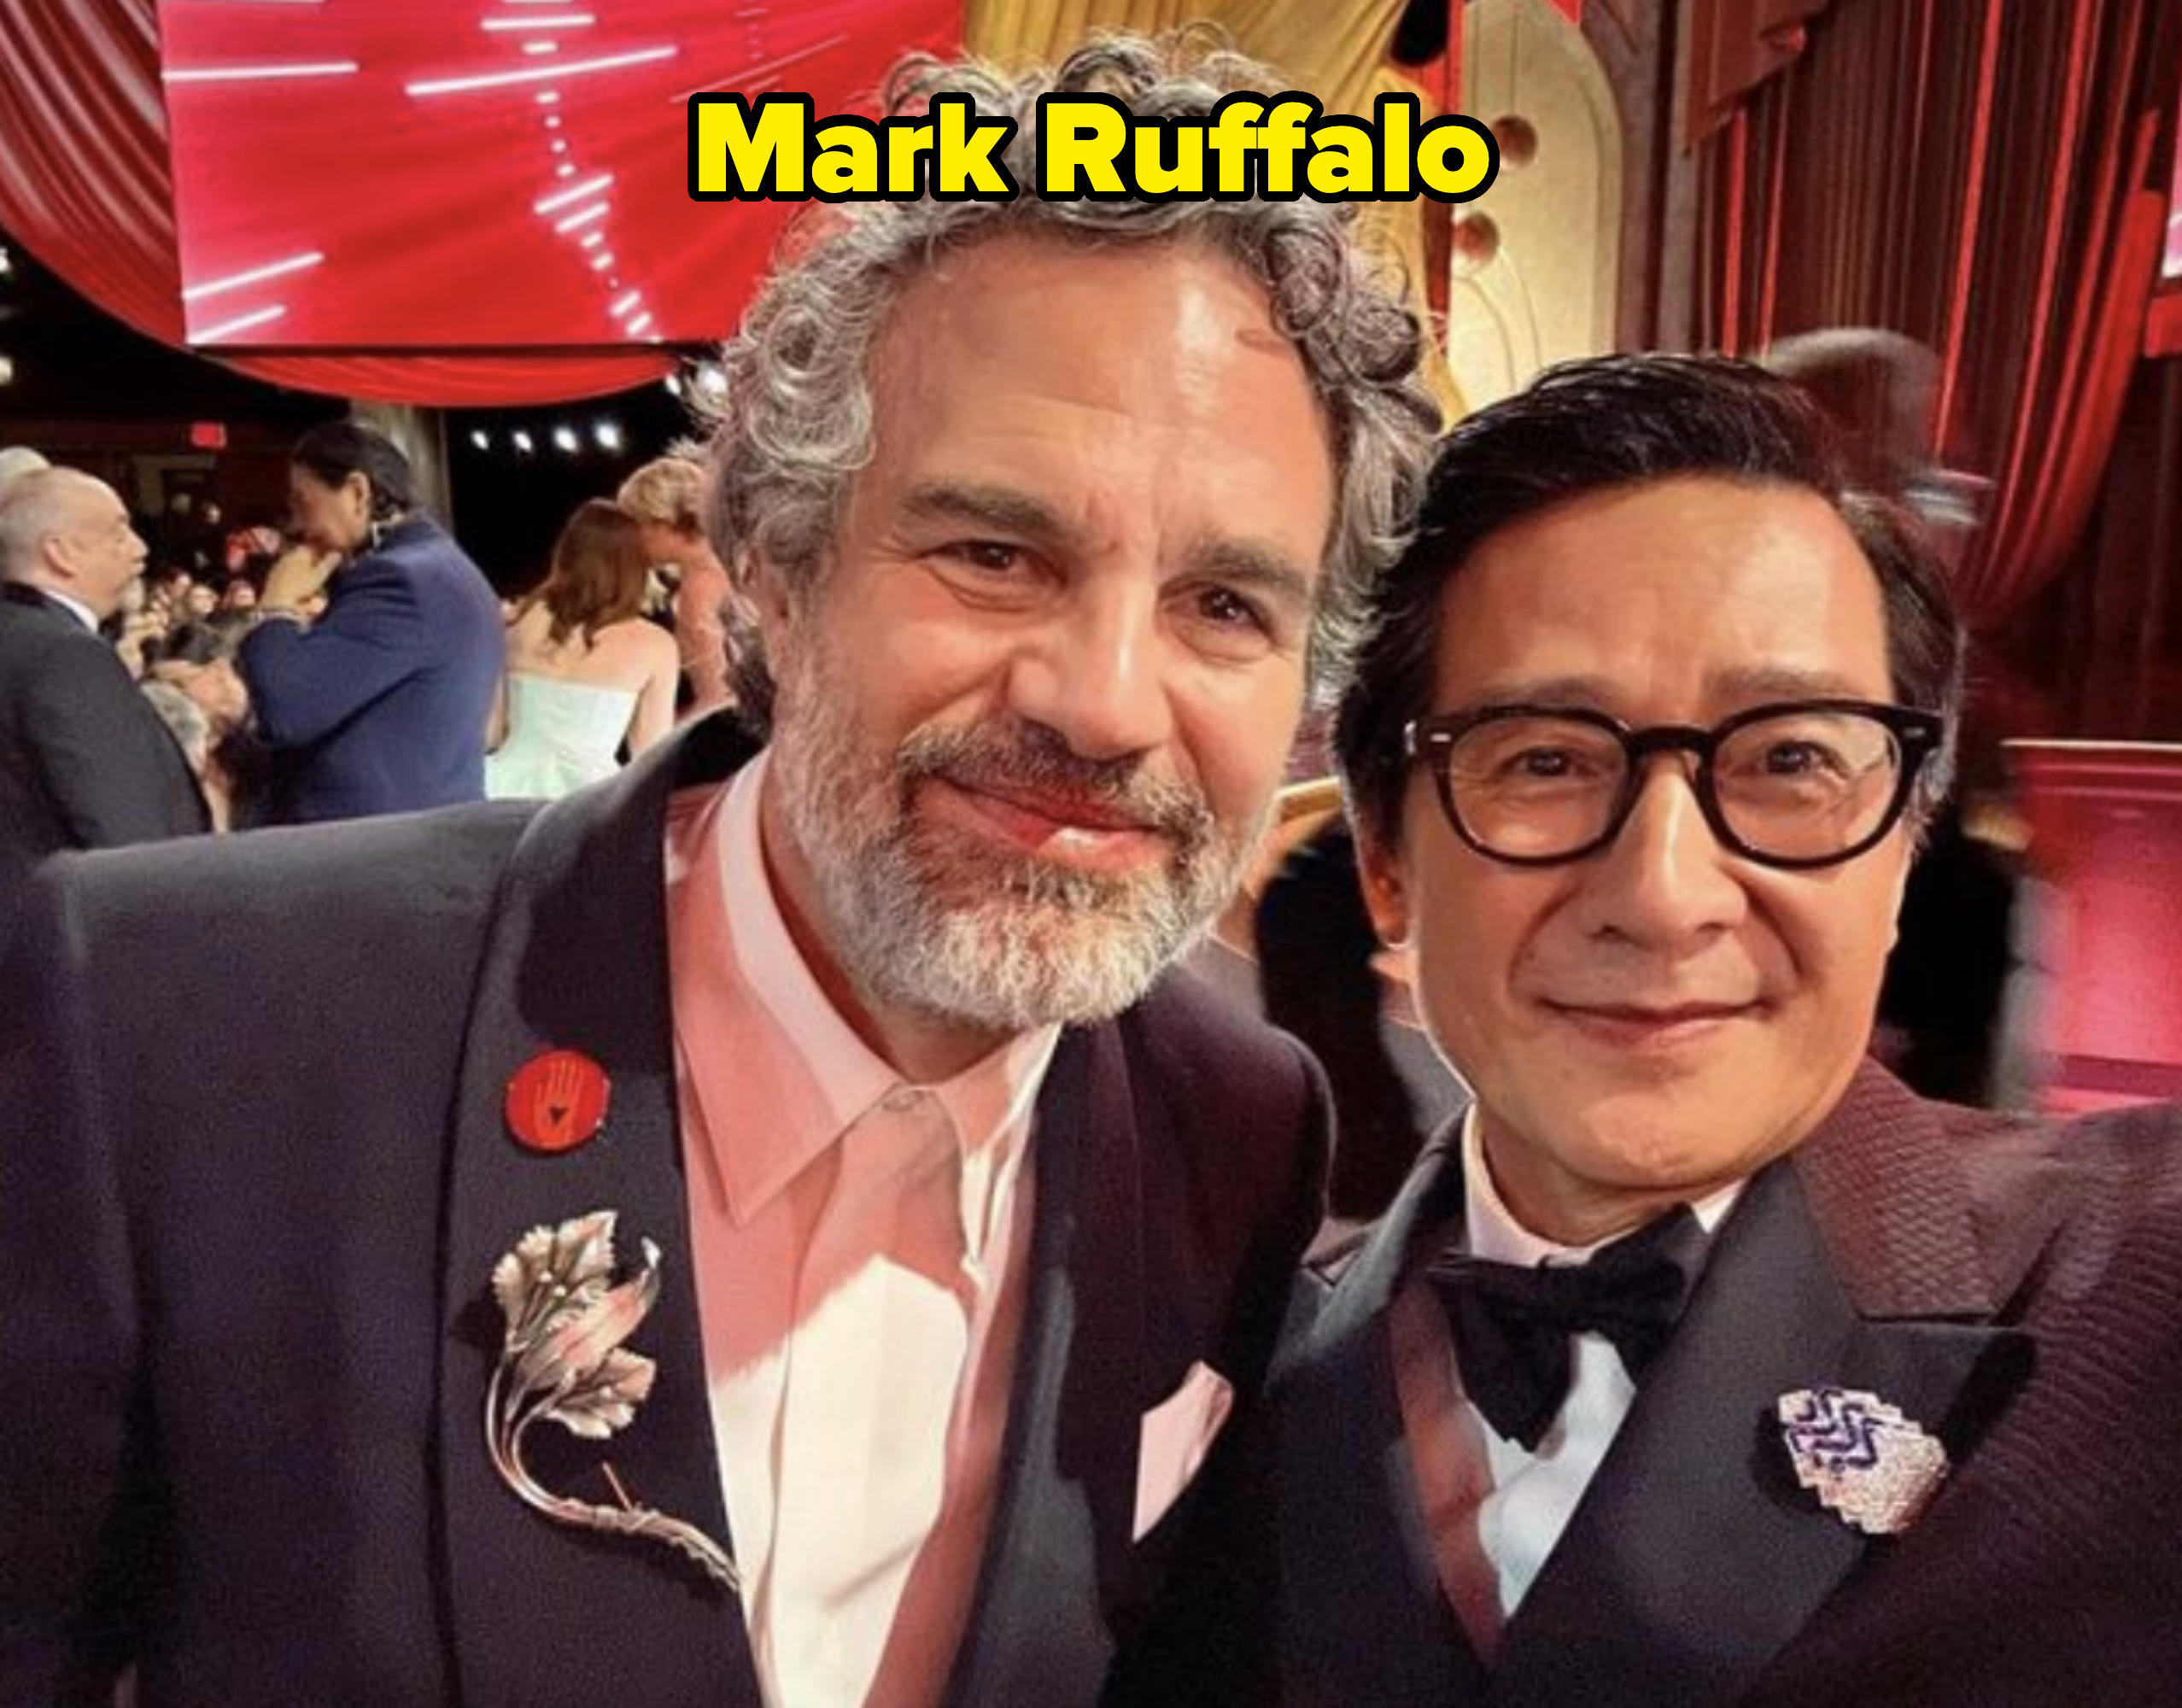 Mark Ruffalo and Ke Huy Quan